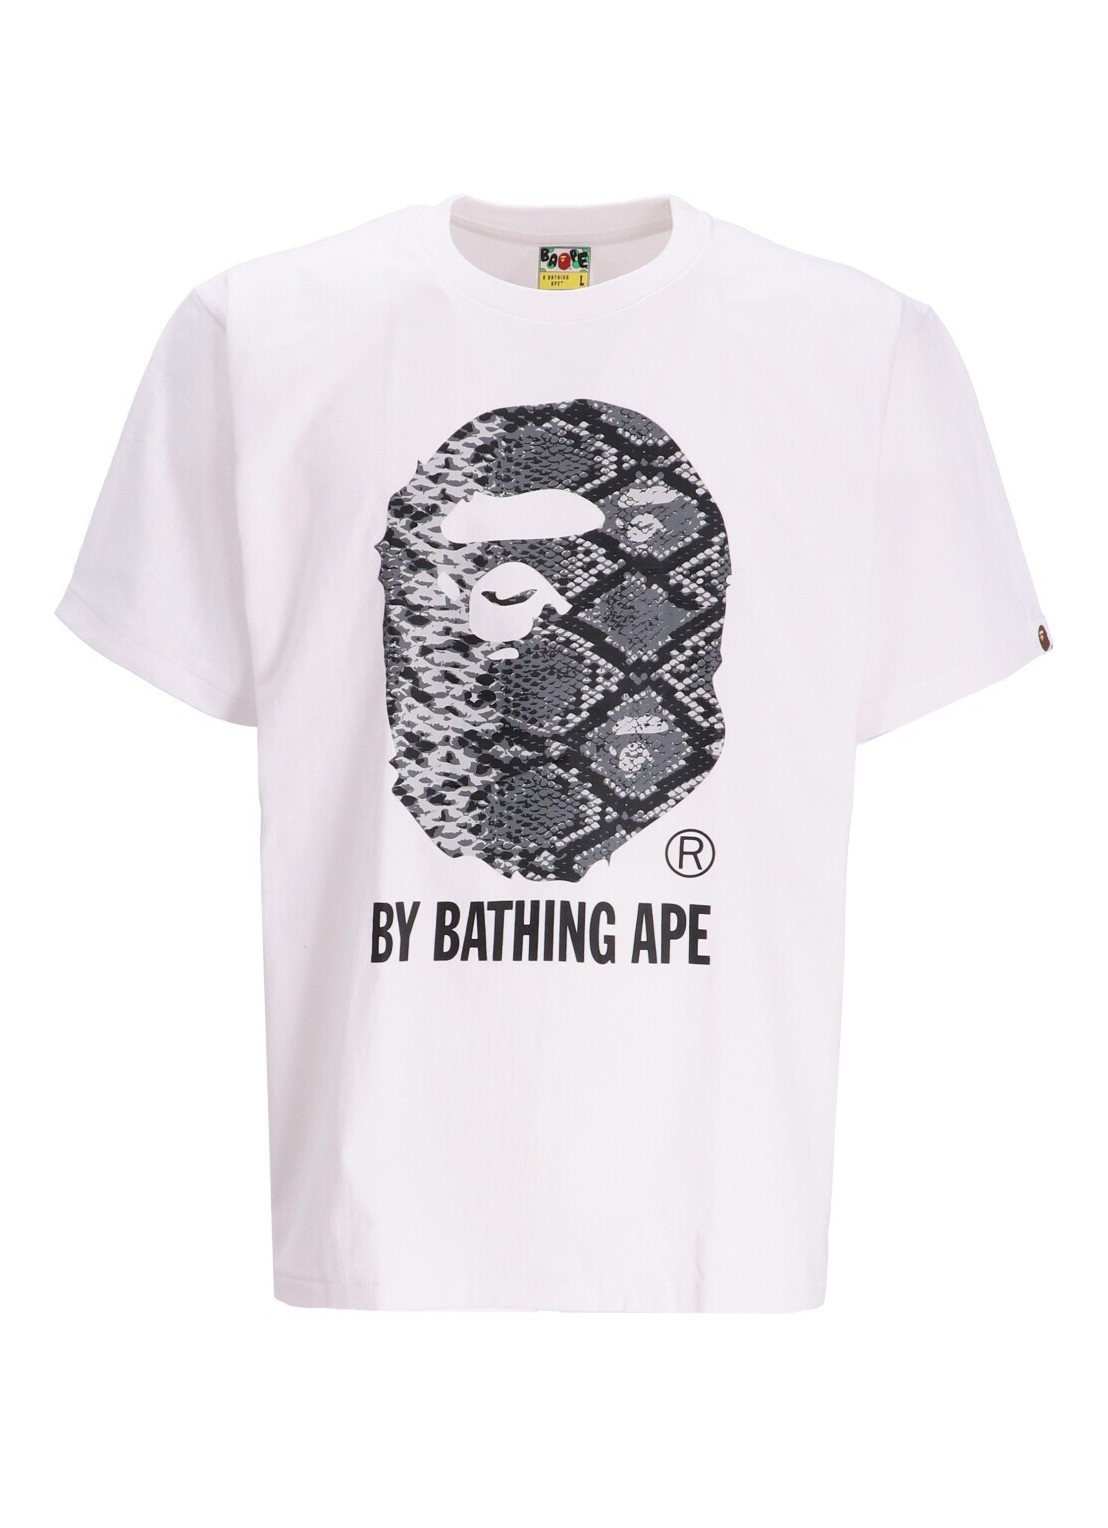 Camiseta bape t-shirt man bape snake by bathing ape tee m c 001tei801036m whxgy talla XXL
 